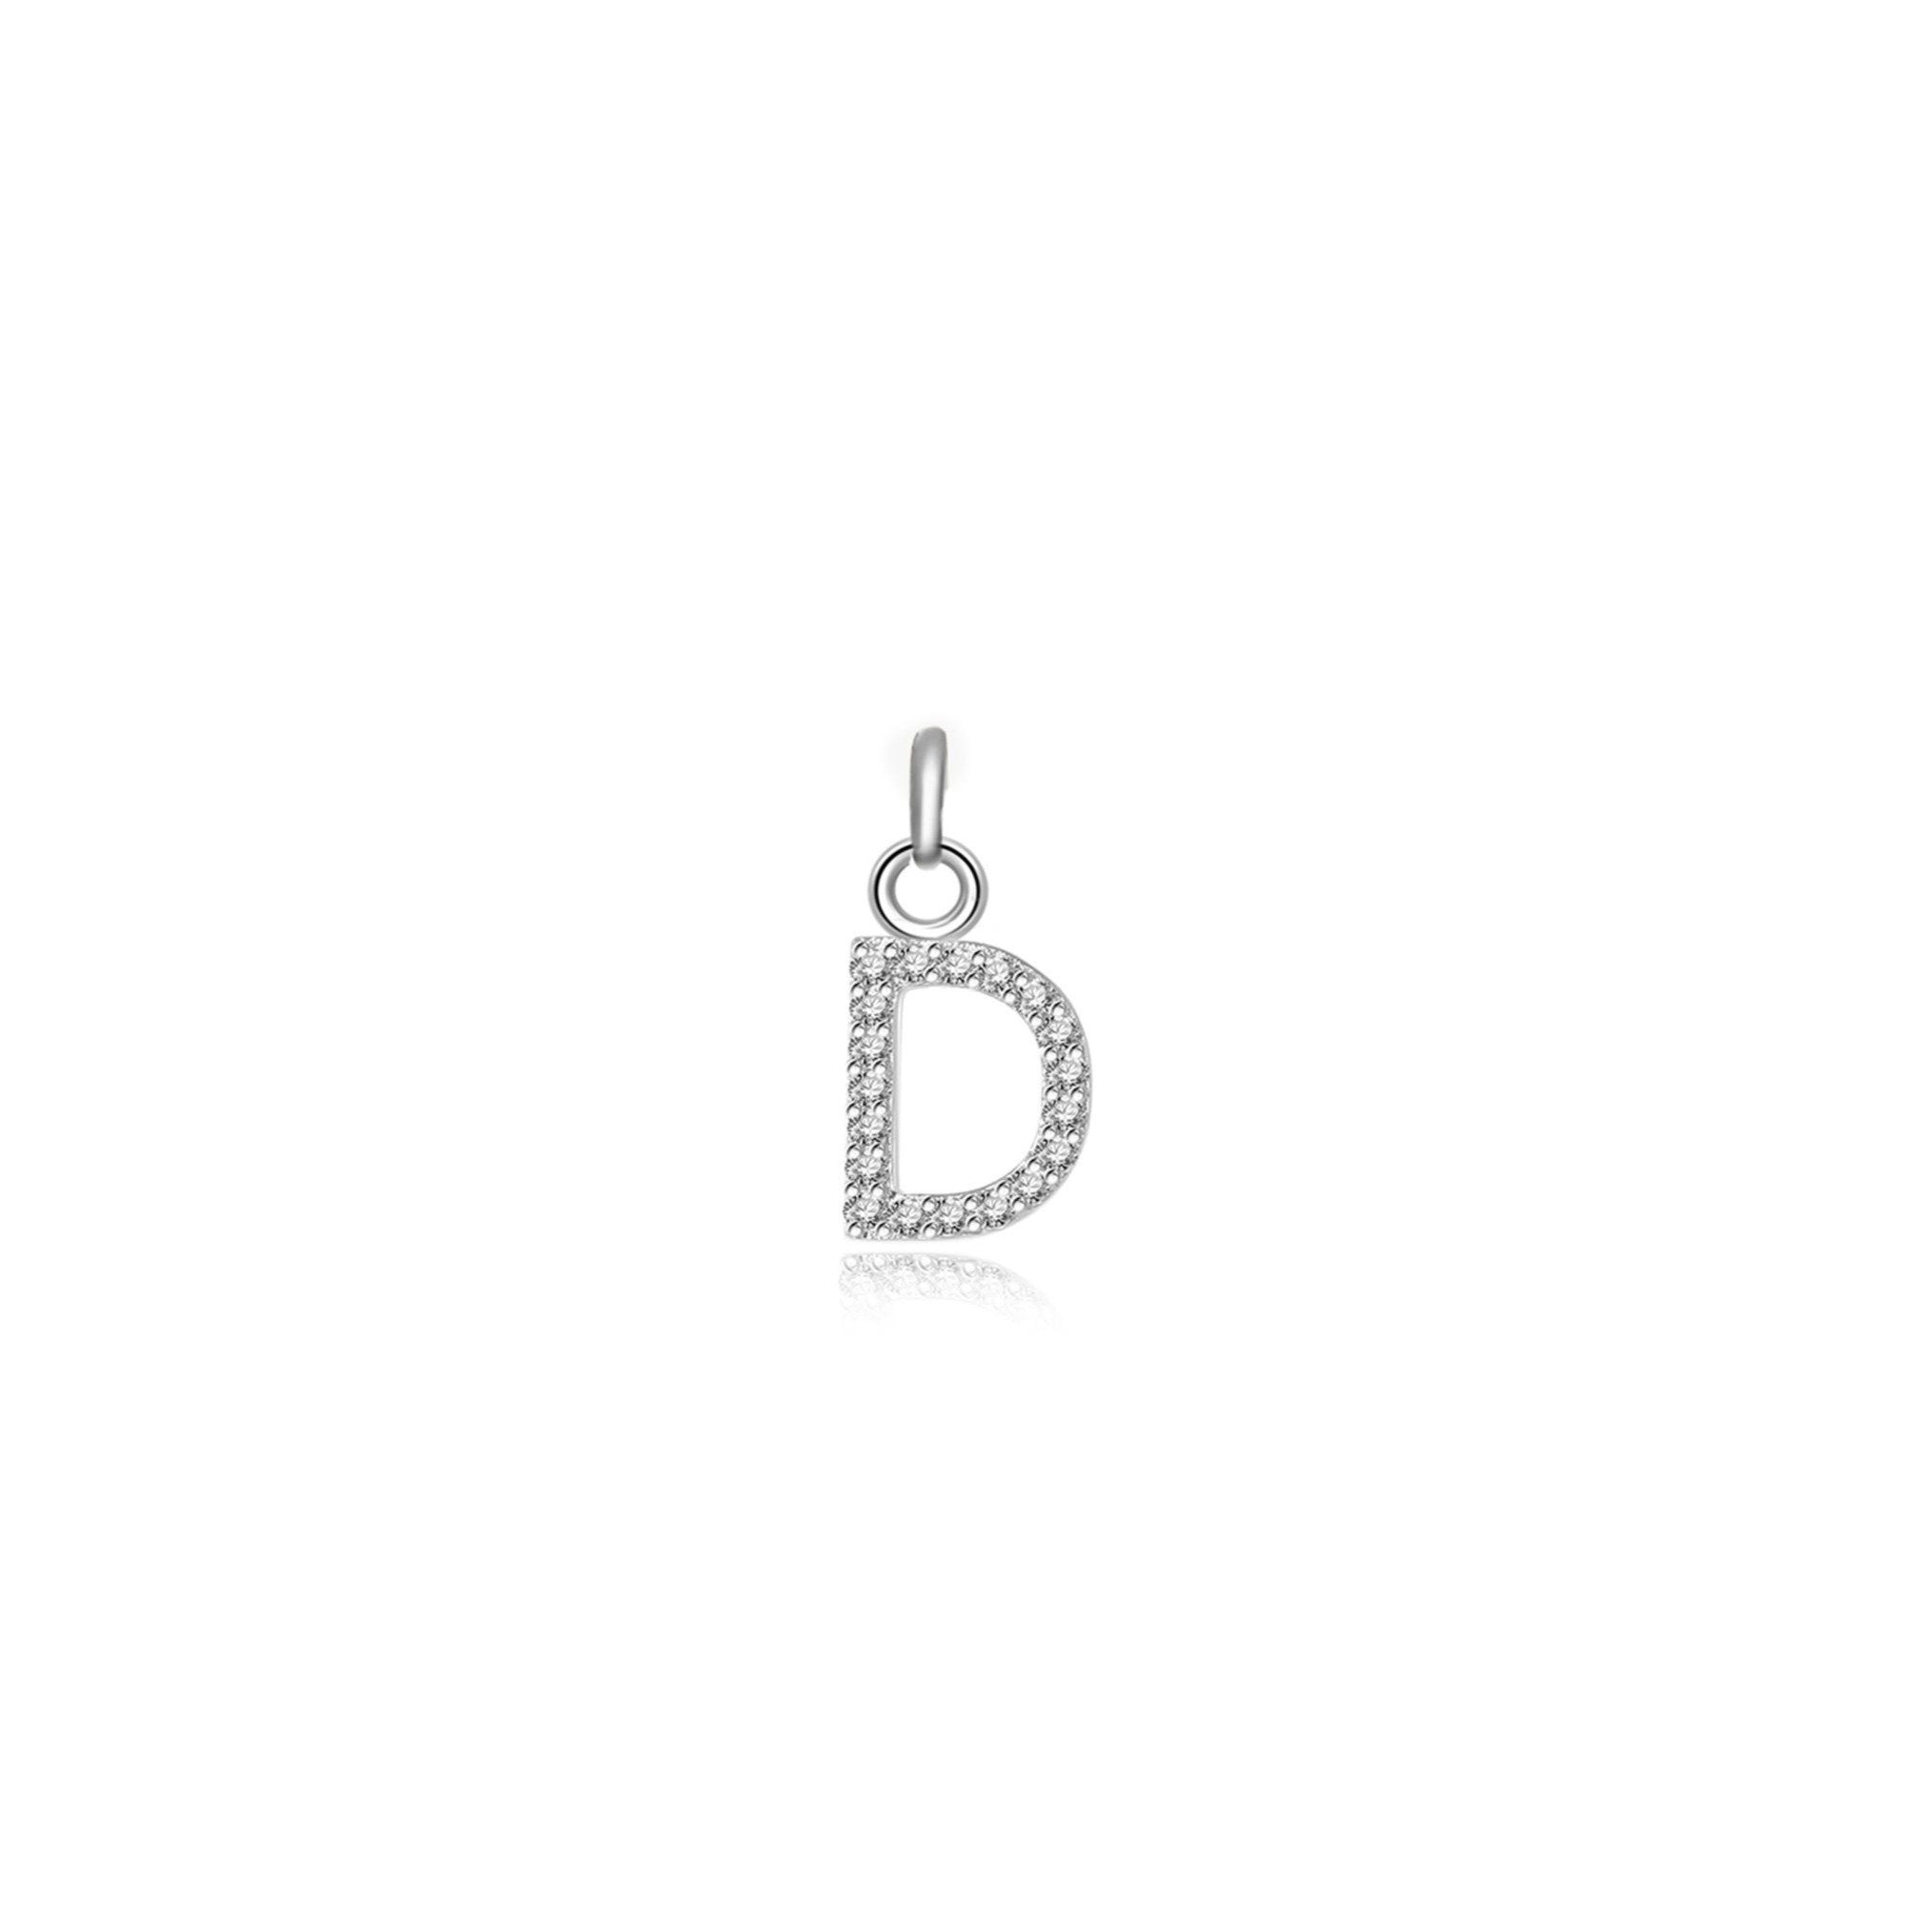 "Little Initial" Necklace - Milas Jewels Shop